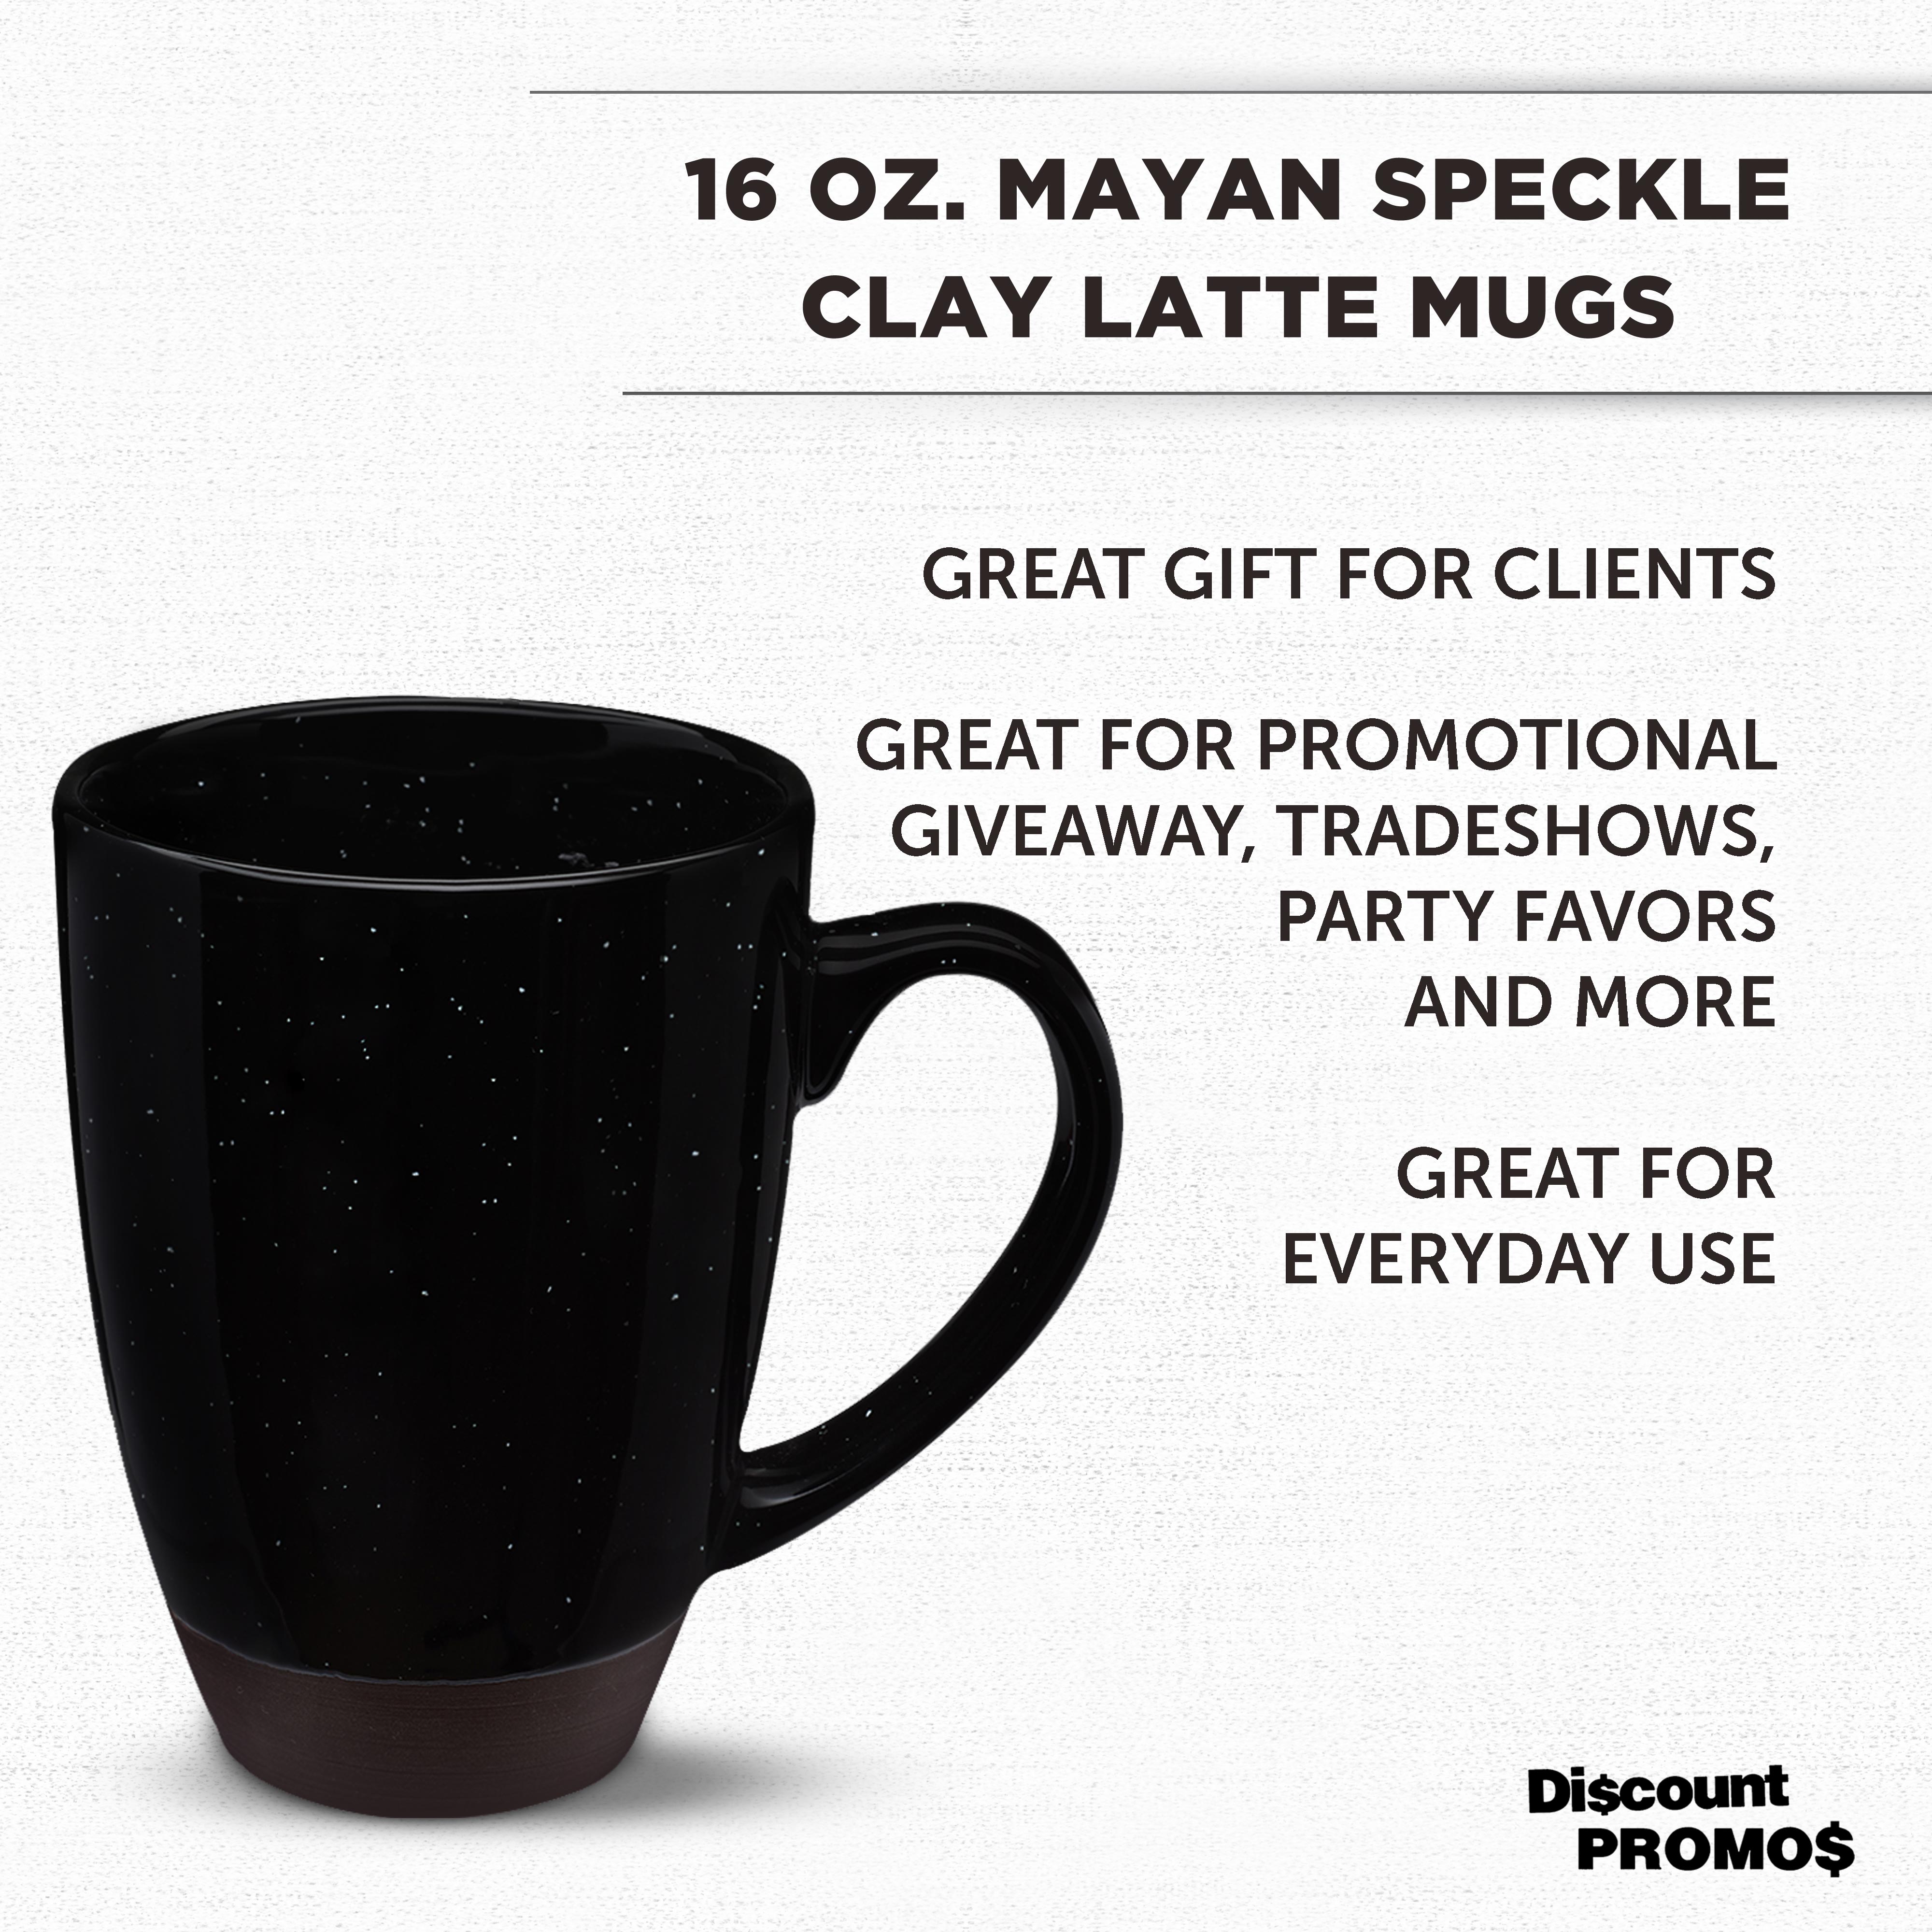 Imprinted Mayan Speckle Clay Latte Mugs (16 Oz.)